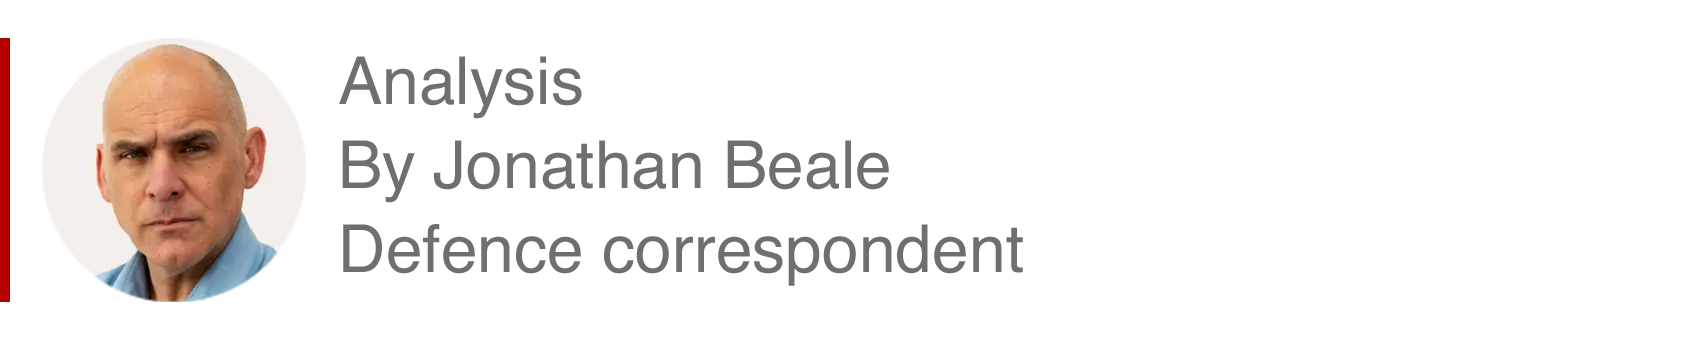 Analysis box by Jonathan Beale, defence correspondent